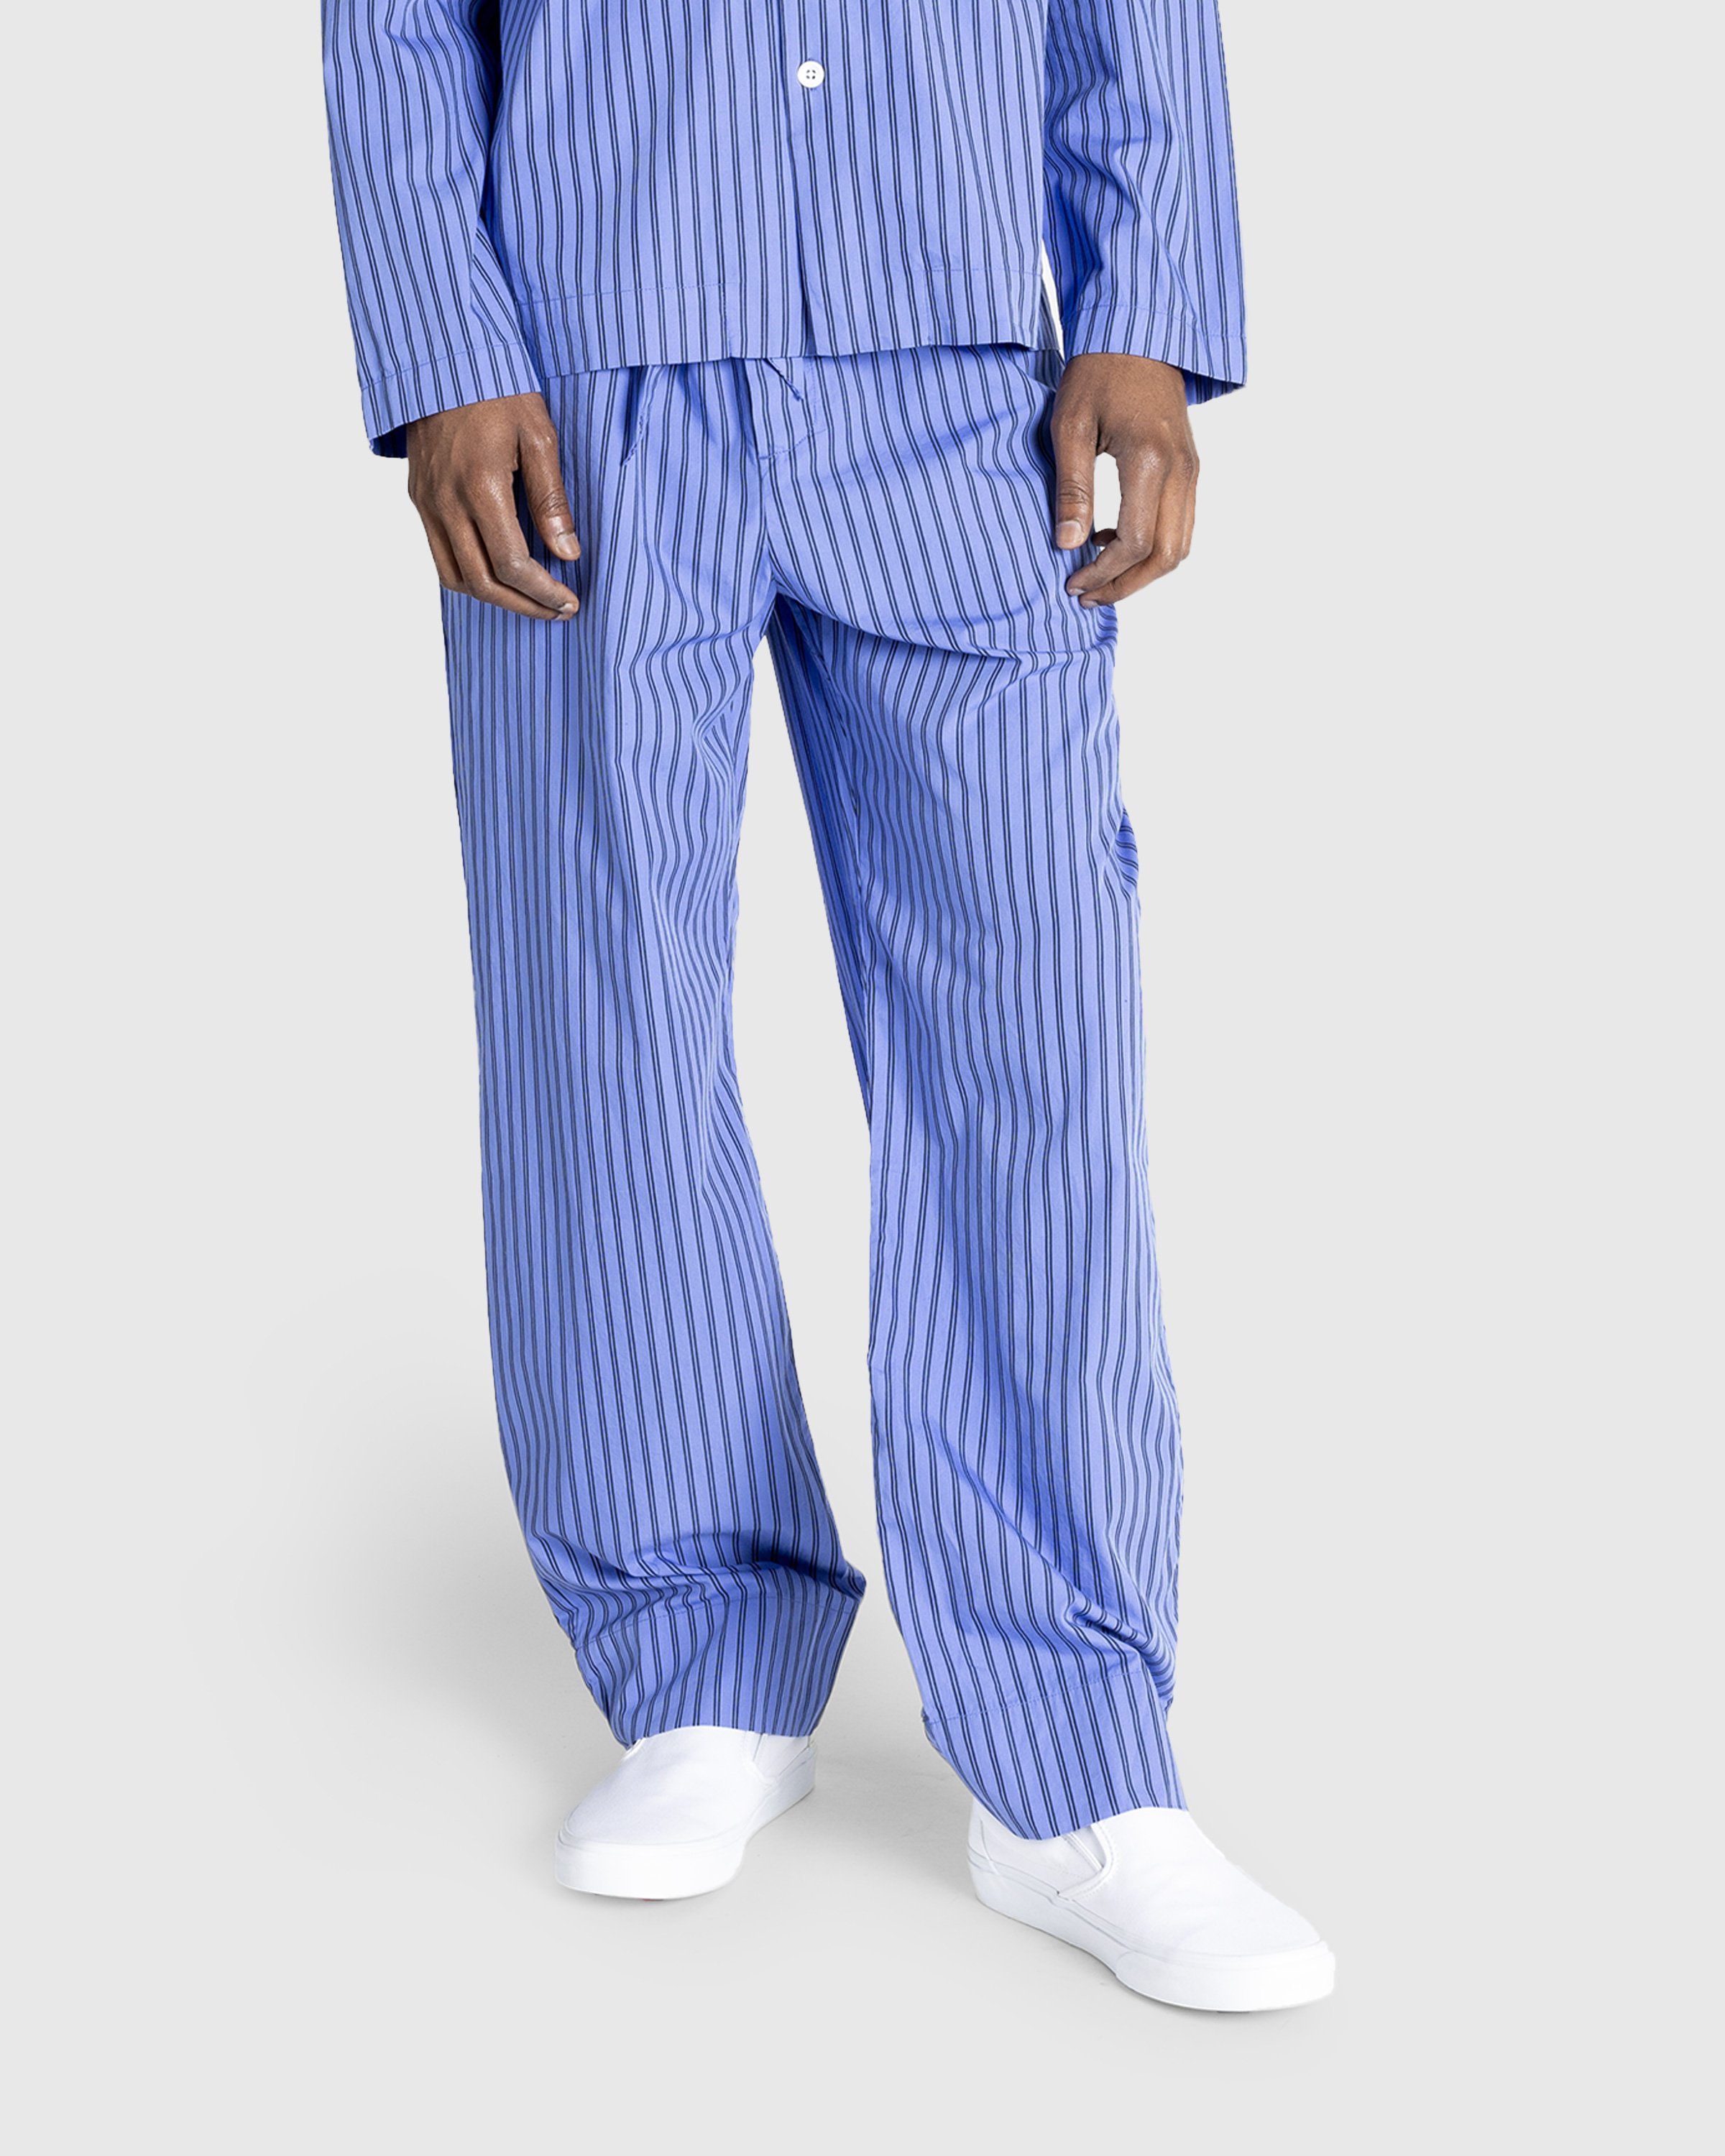 Tekla - Cotton Poplin - Pyjamas Pants Boro Stripes - Clothing - Blue - Image 2